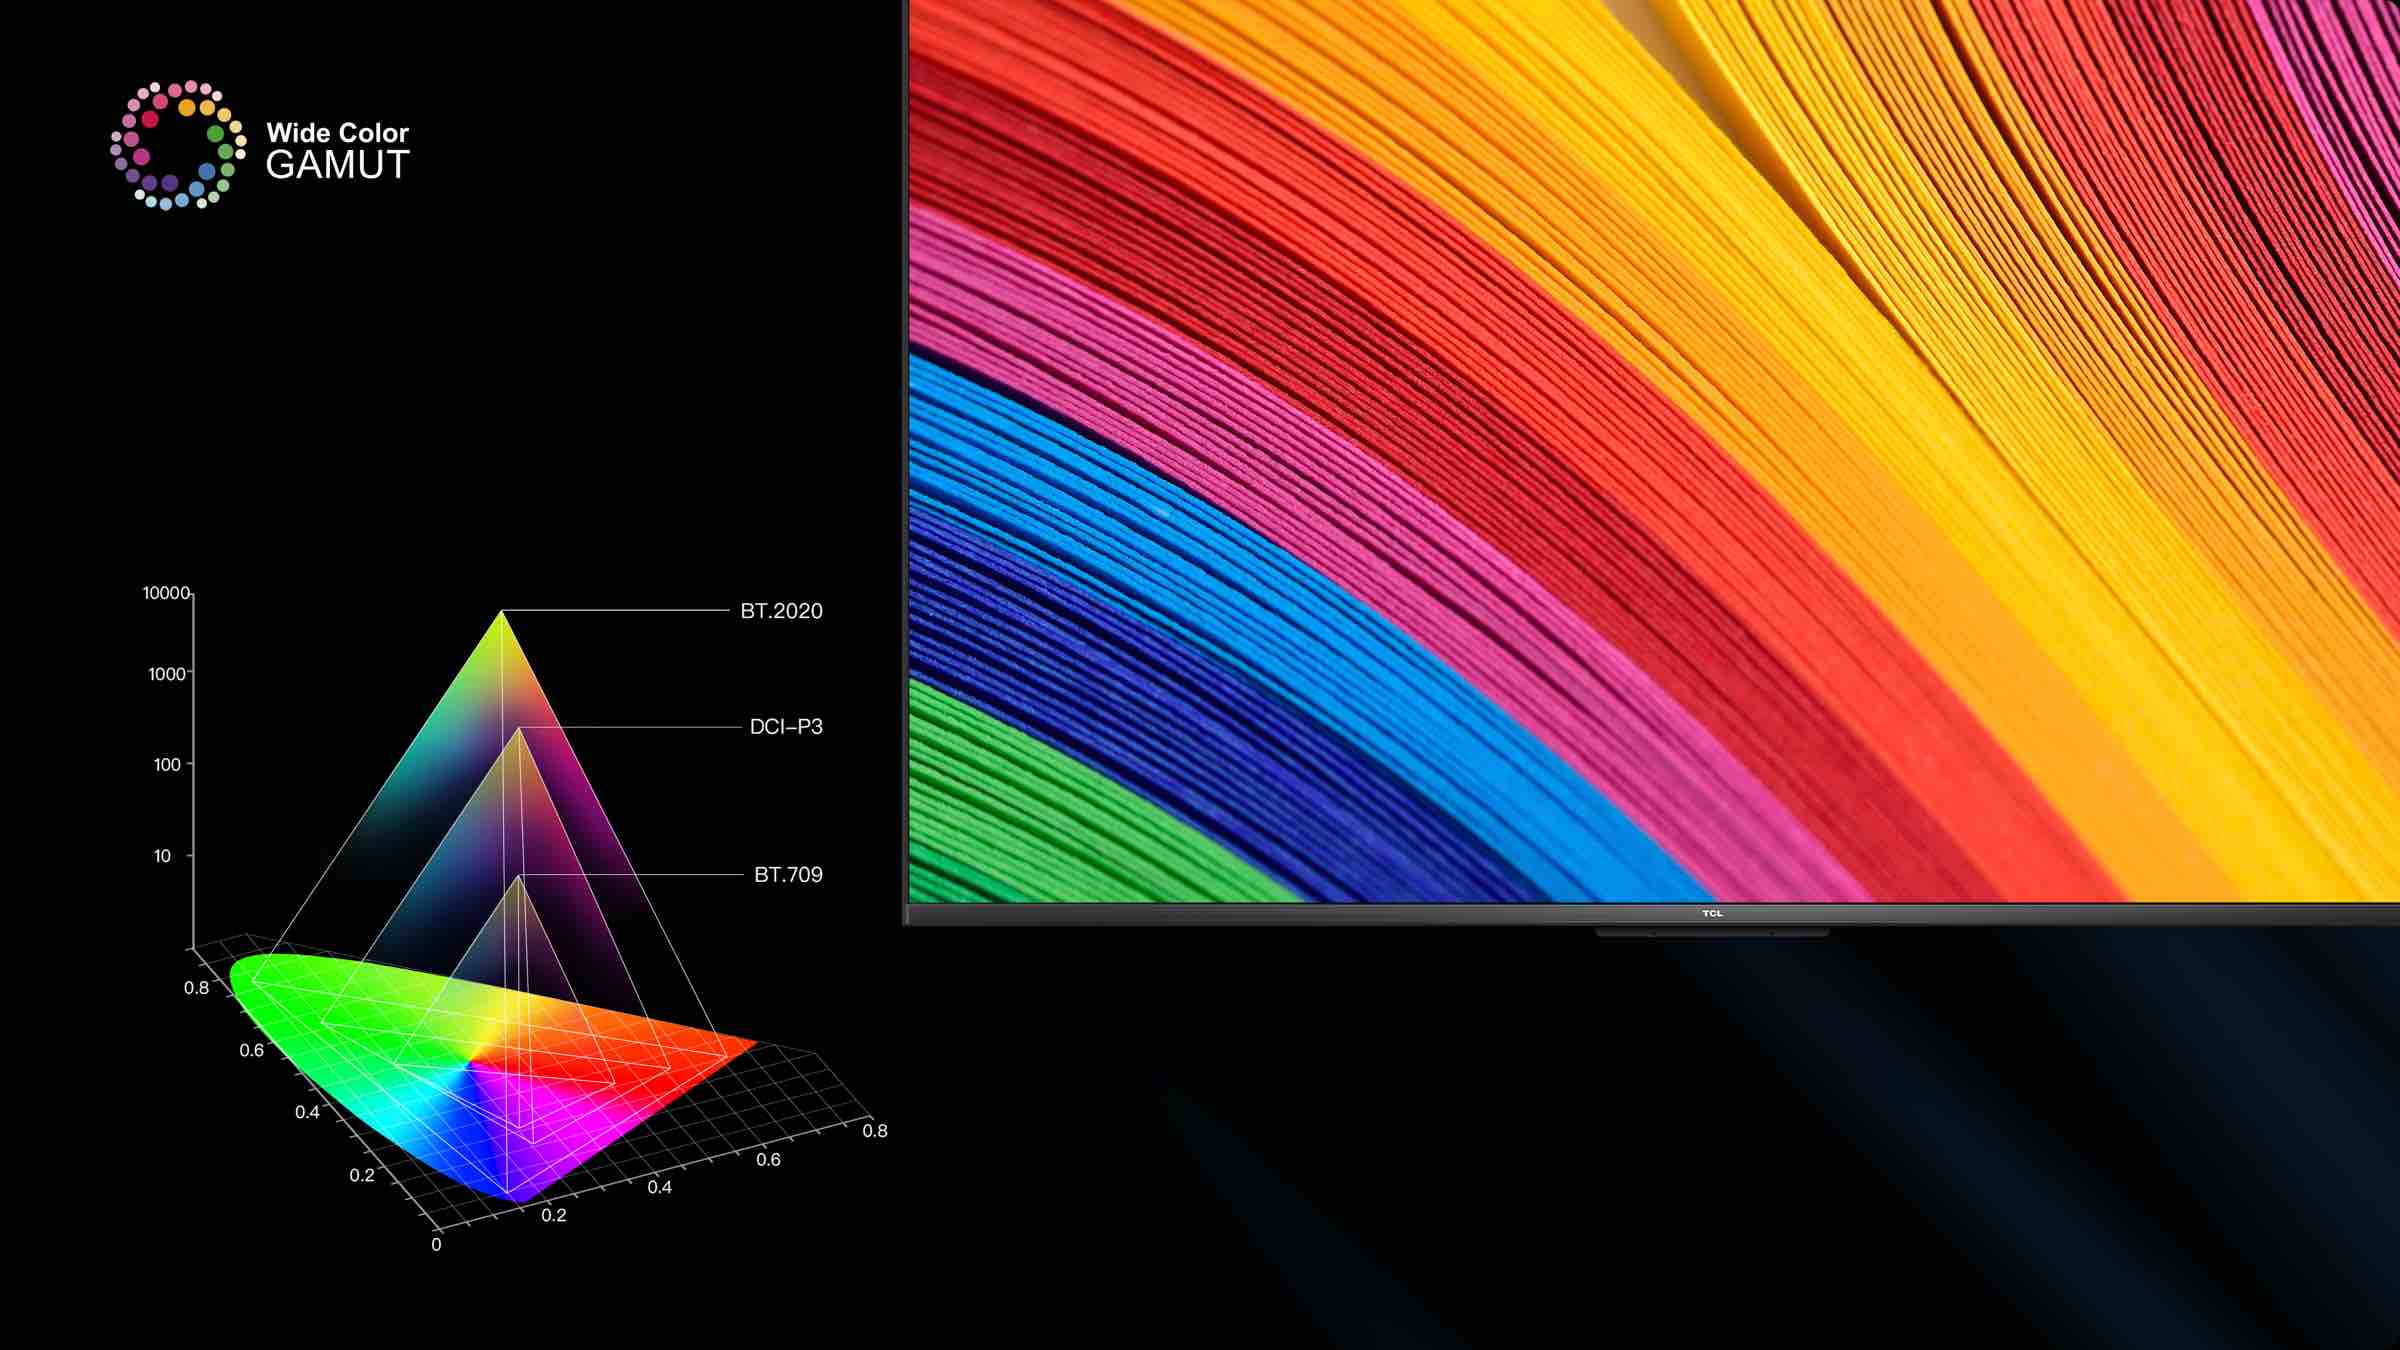 TCL 98P755 4K UHD TV Amplia gama de colores